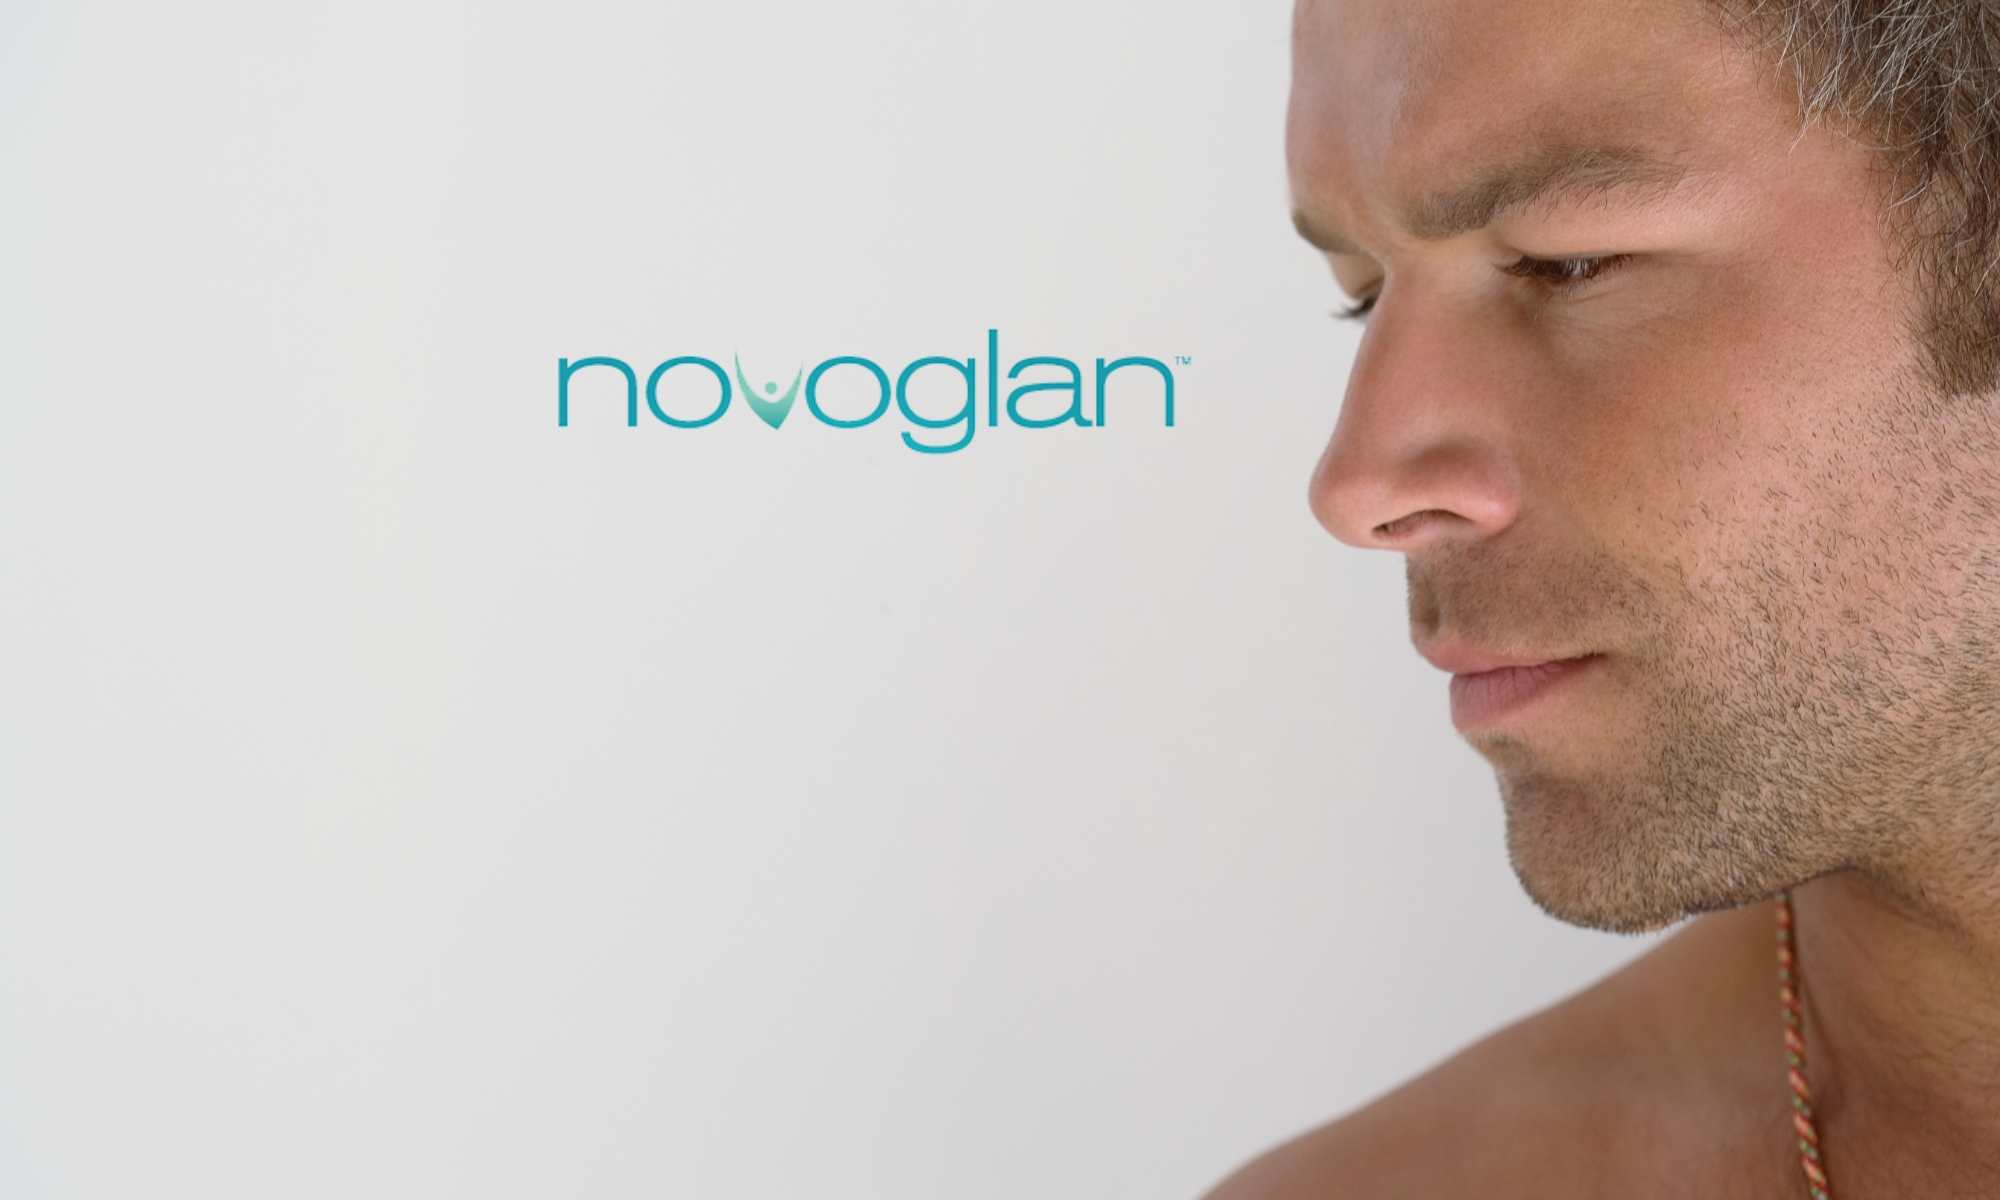 Novoglan Products in the UK